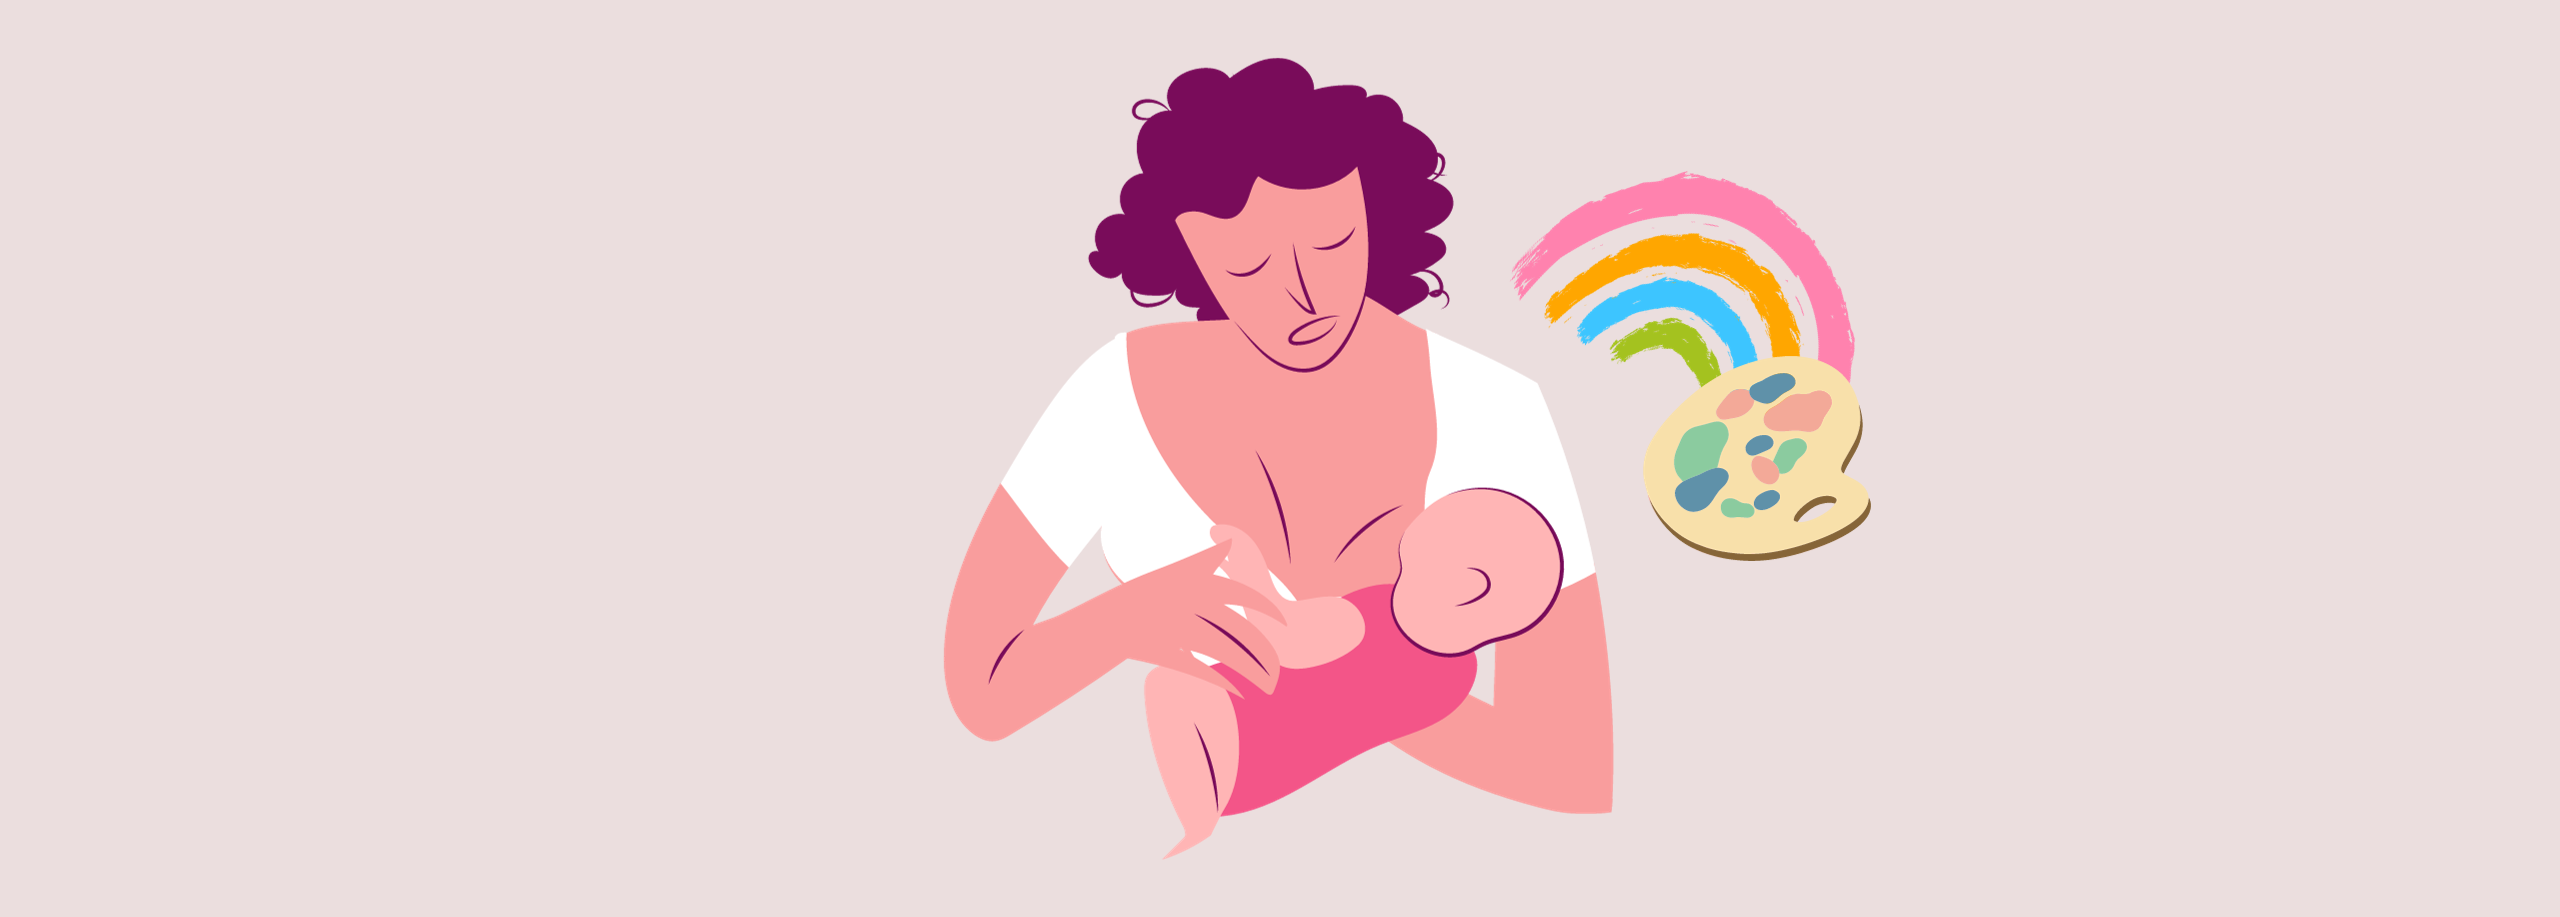 adhd medication while breastfeeding